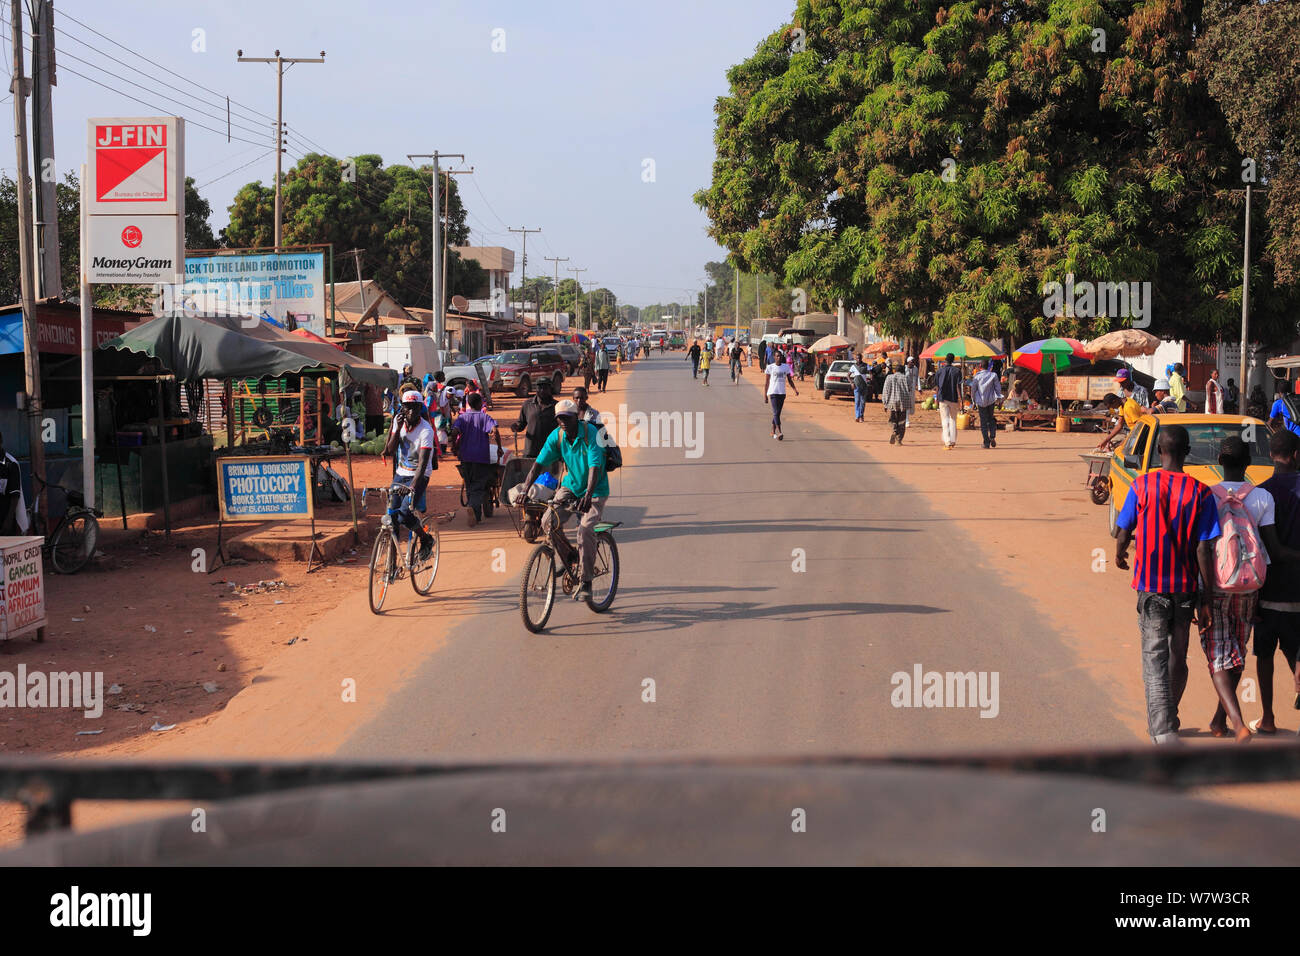 Street market scene, Gambia, West Africa, November 2012. Stock Photo